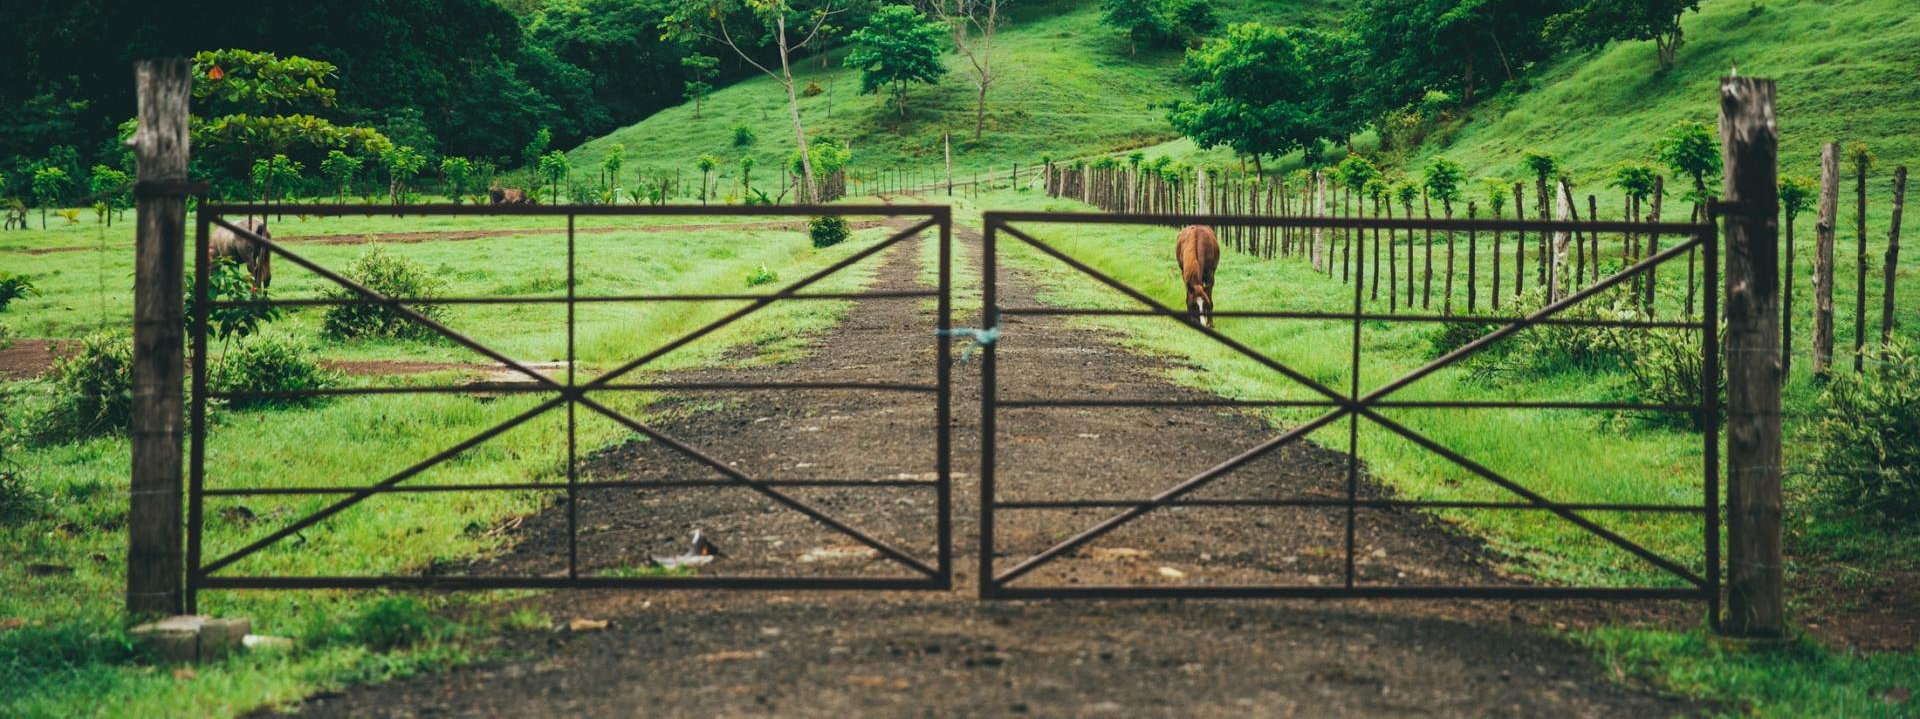 Victoria Custom Gates specializes in custom acreage gates and livestock gates